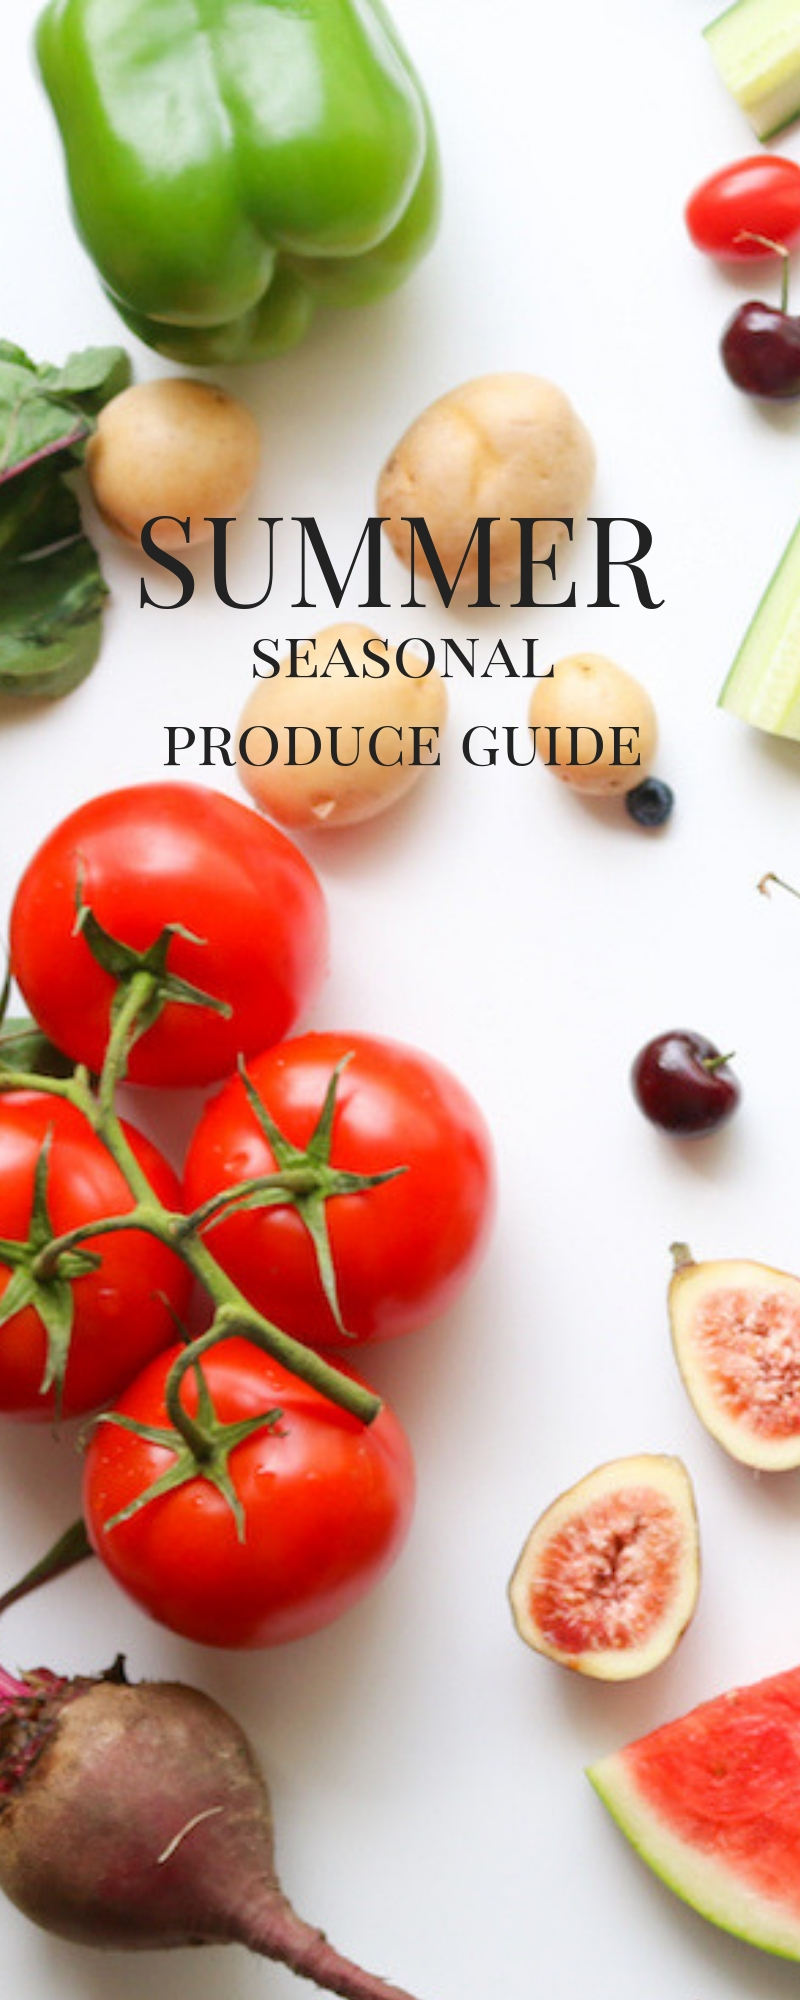 Summer Seasonal Produce Guide | www.livesimplynatural.com